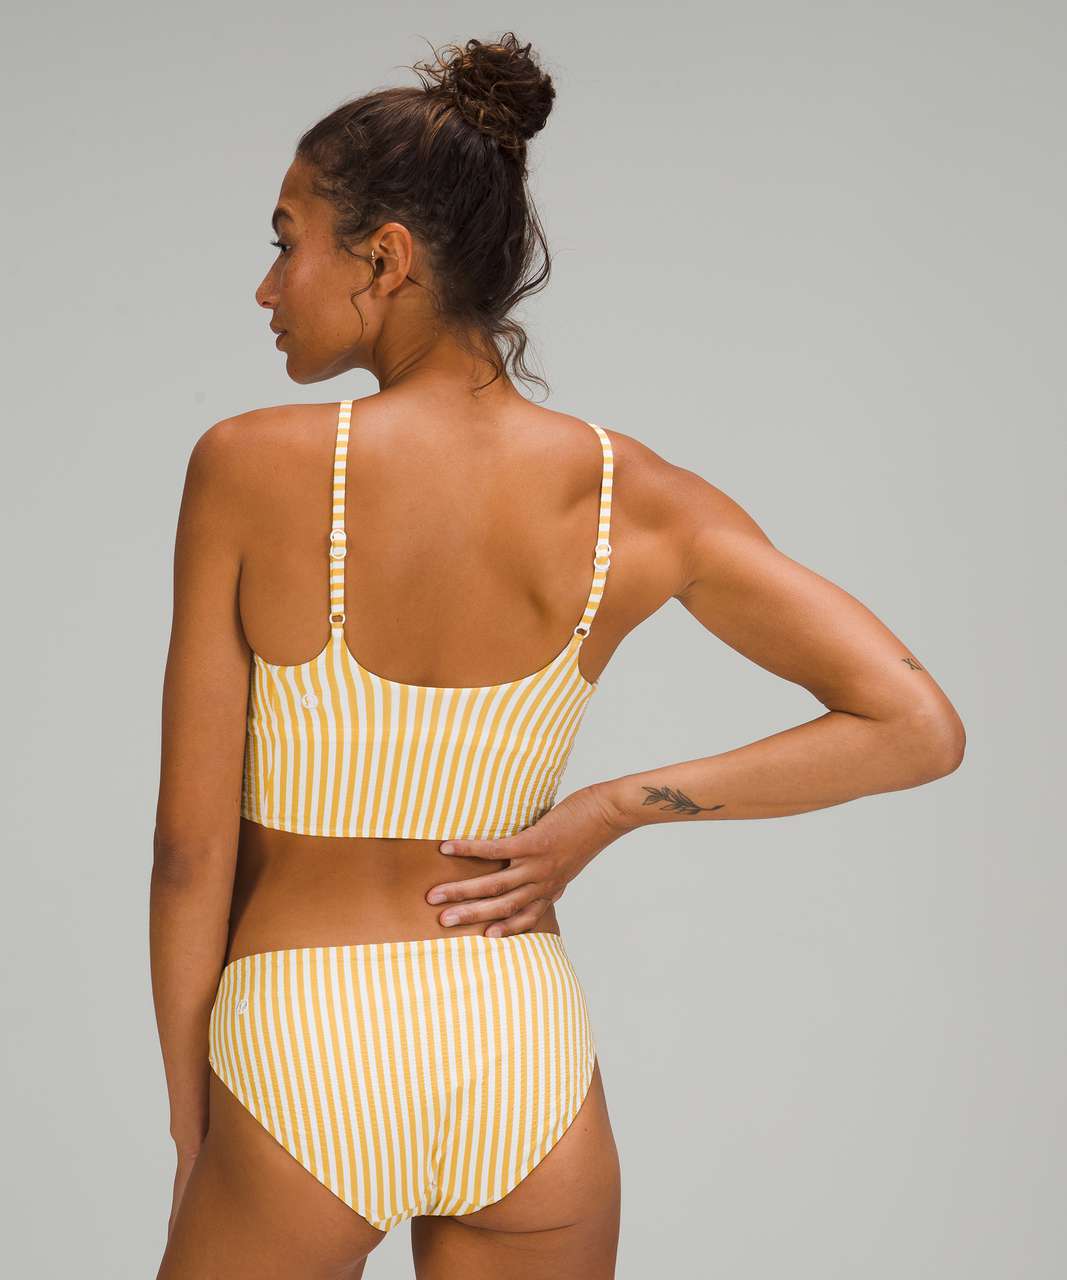 Lululemon Seersucker High-Neck Long-Line Swim Top *C/D Cups - Energize Stripe White Wheat Yellow